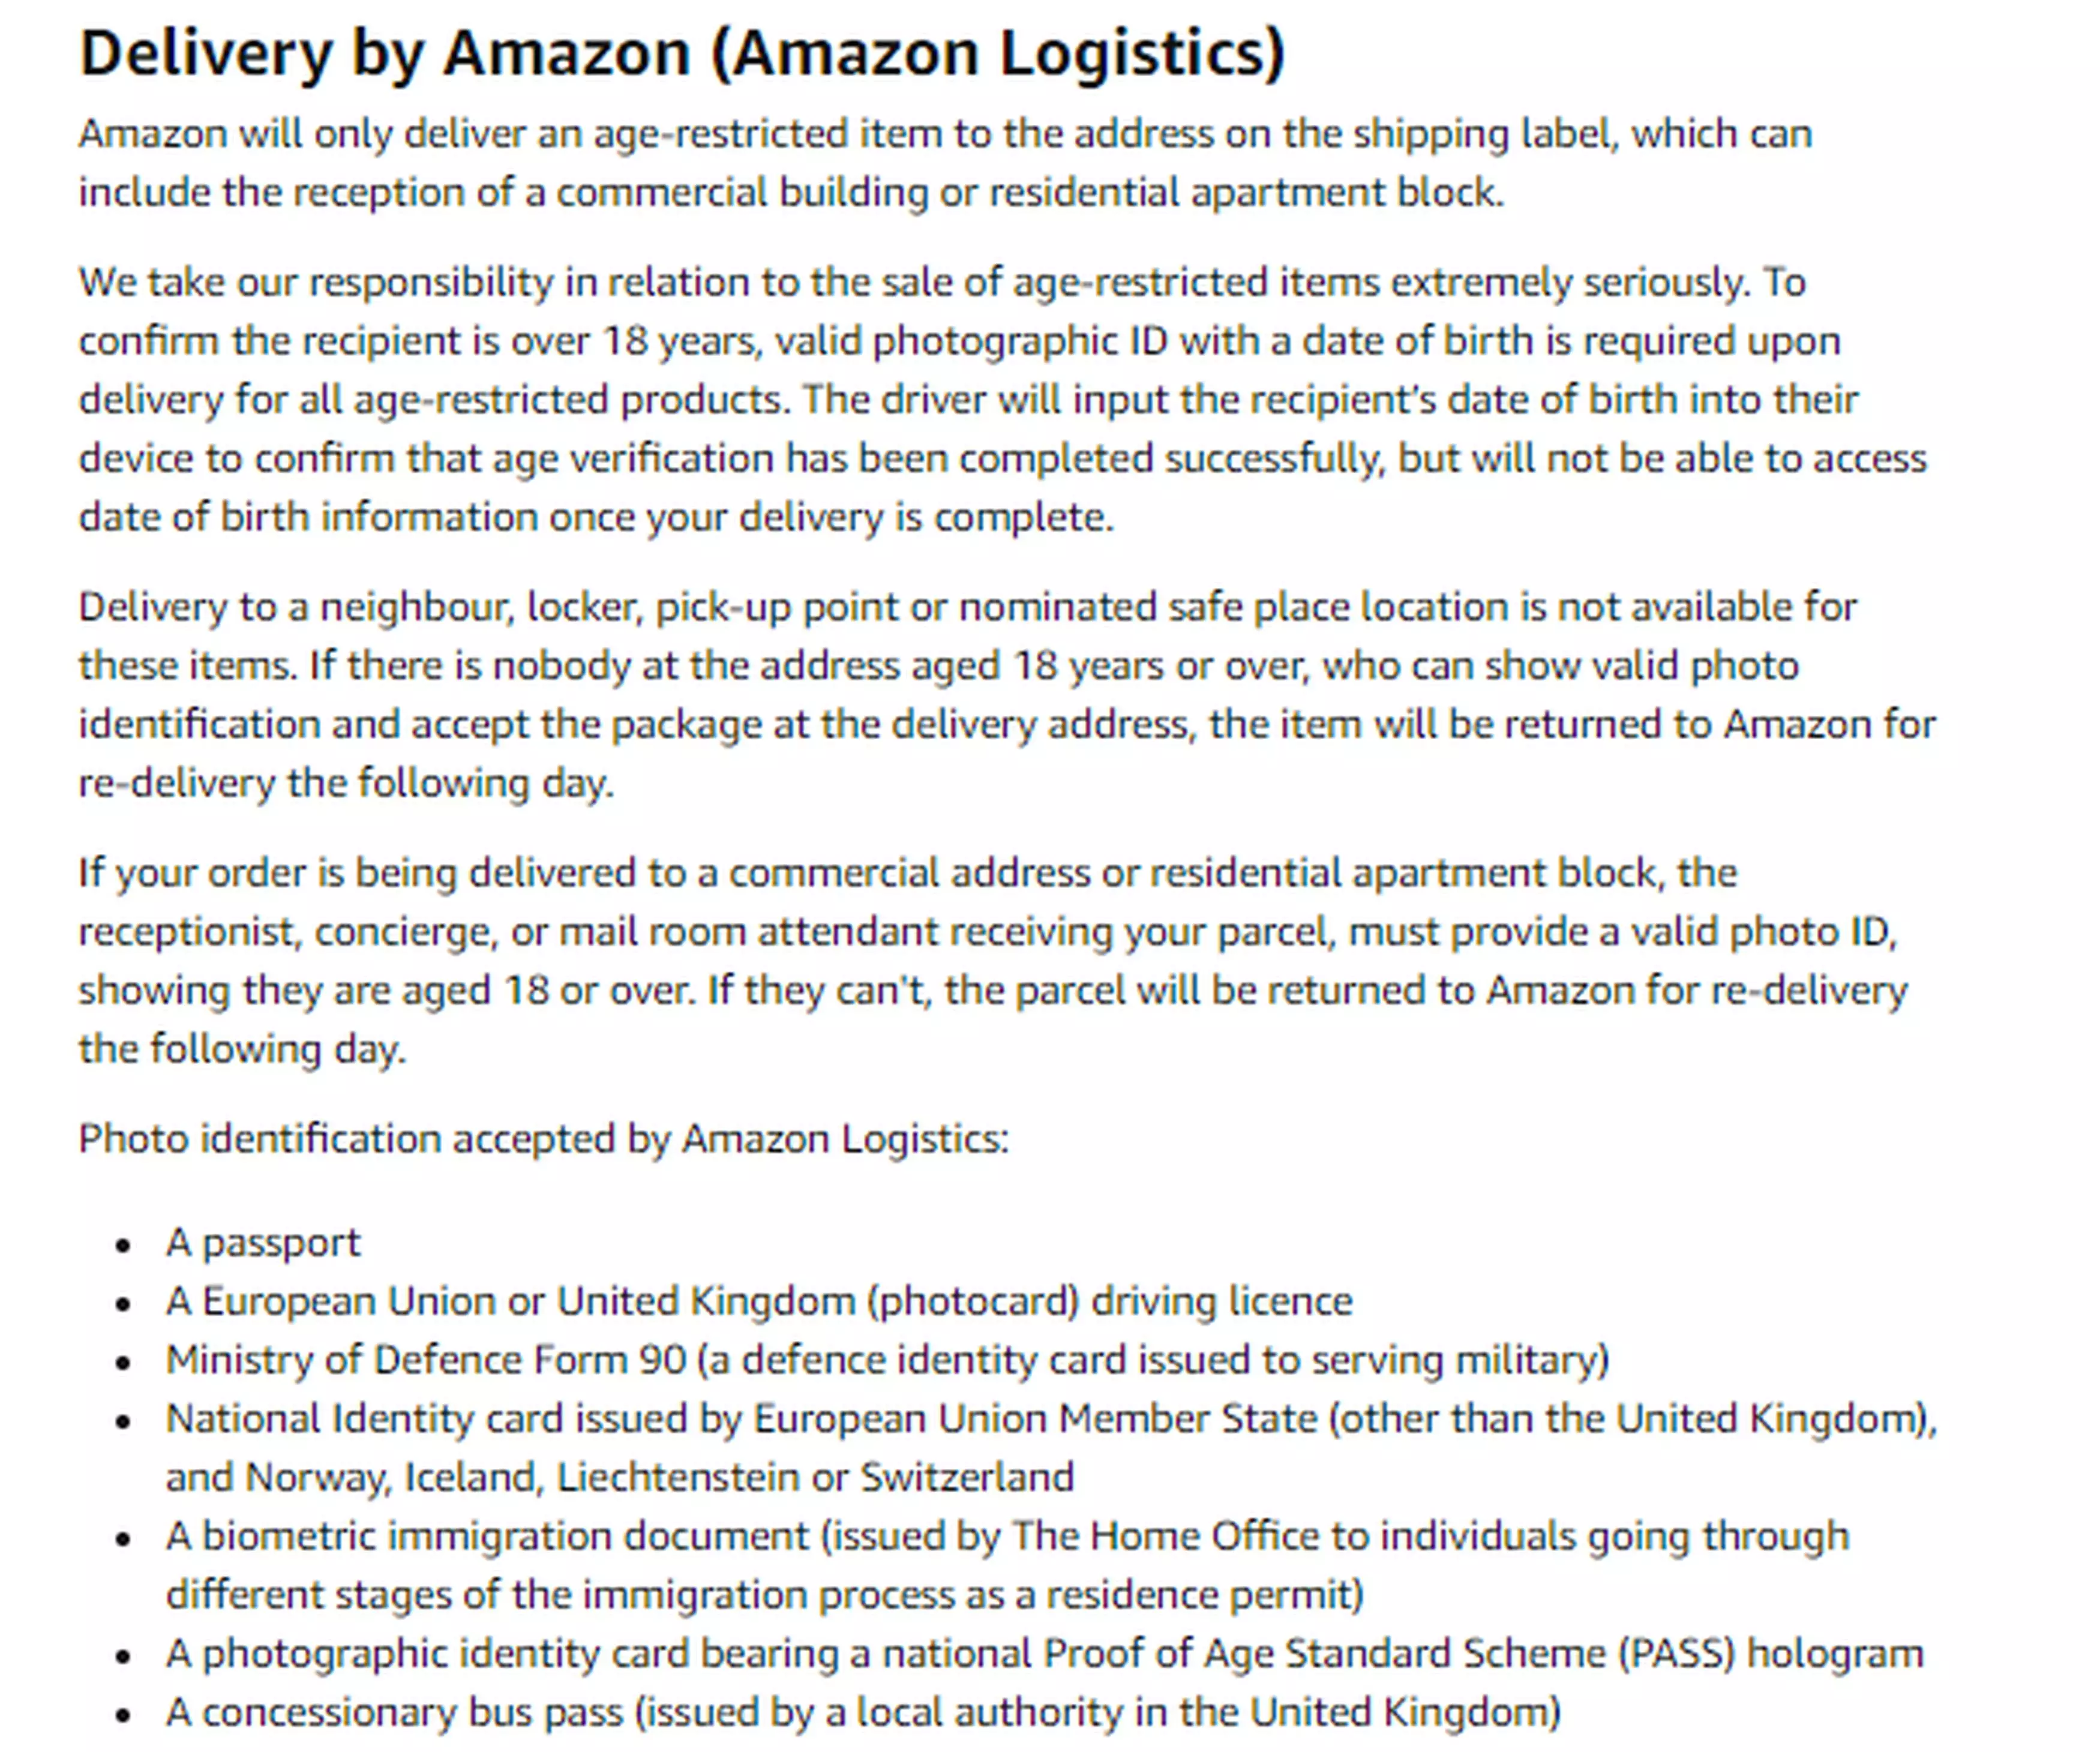 The Amazon requirements didn't allow Natasha to use non-photo ID (